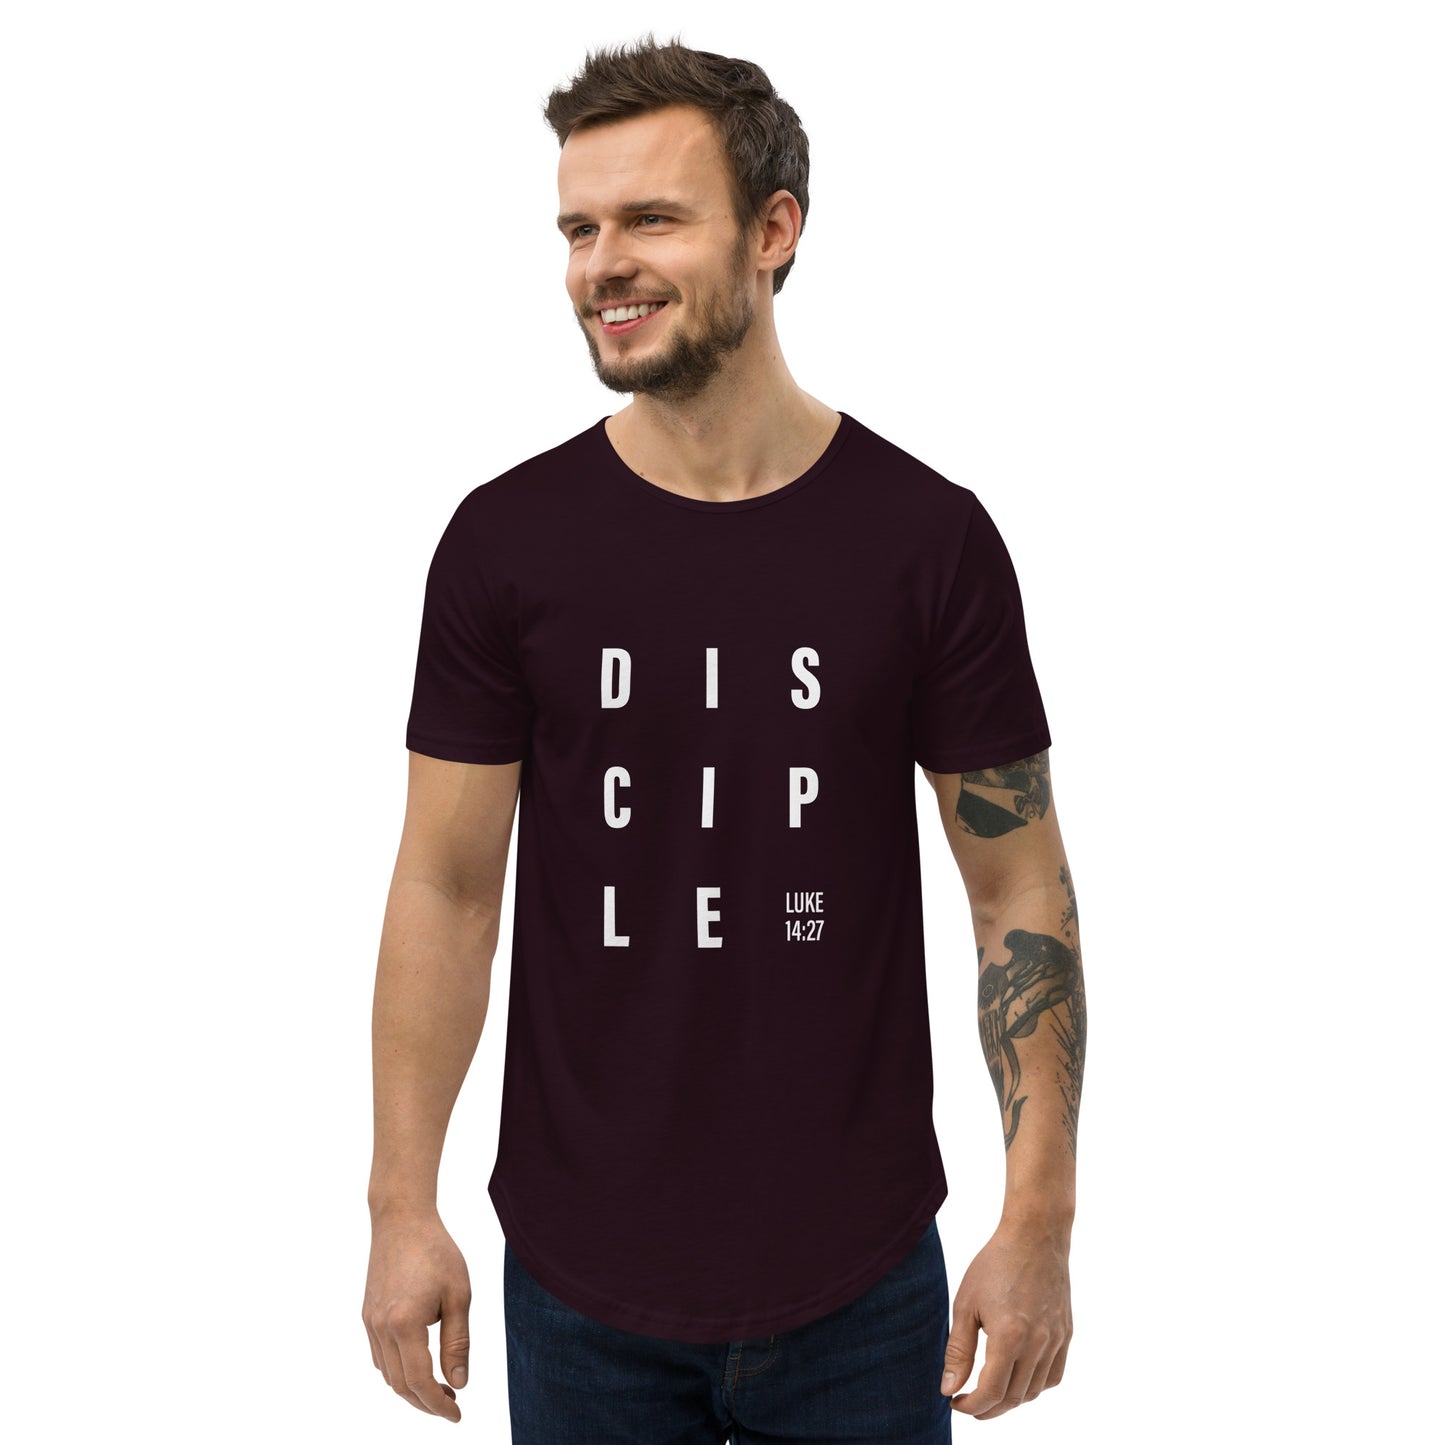 Disciple - Men's Curved T-Shirt